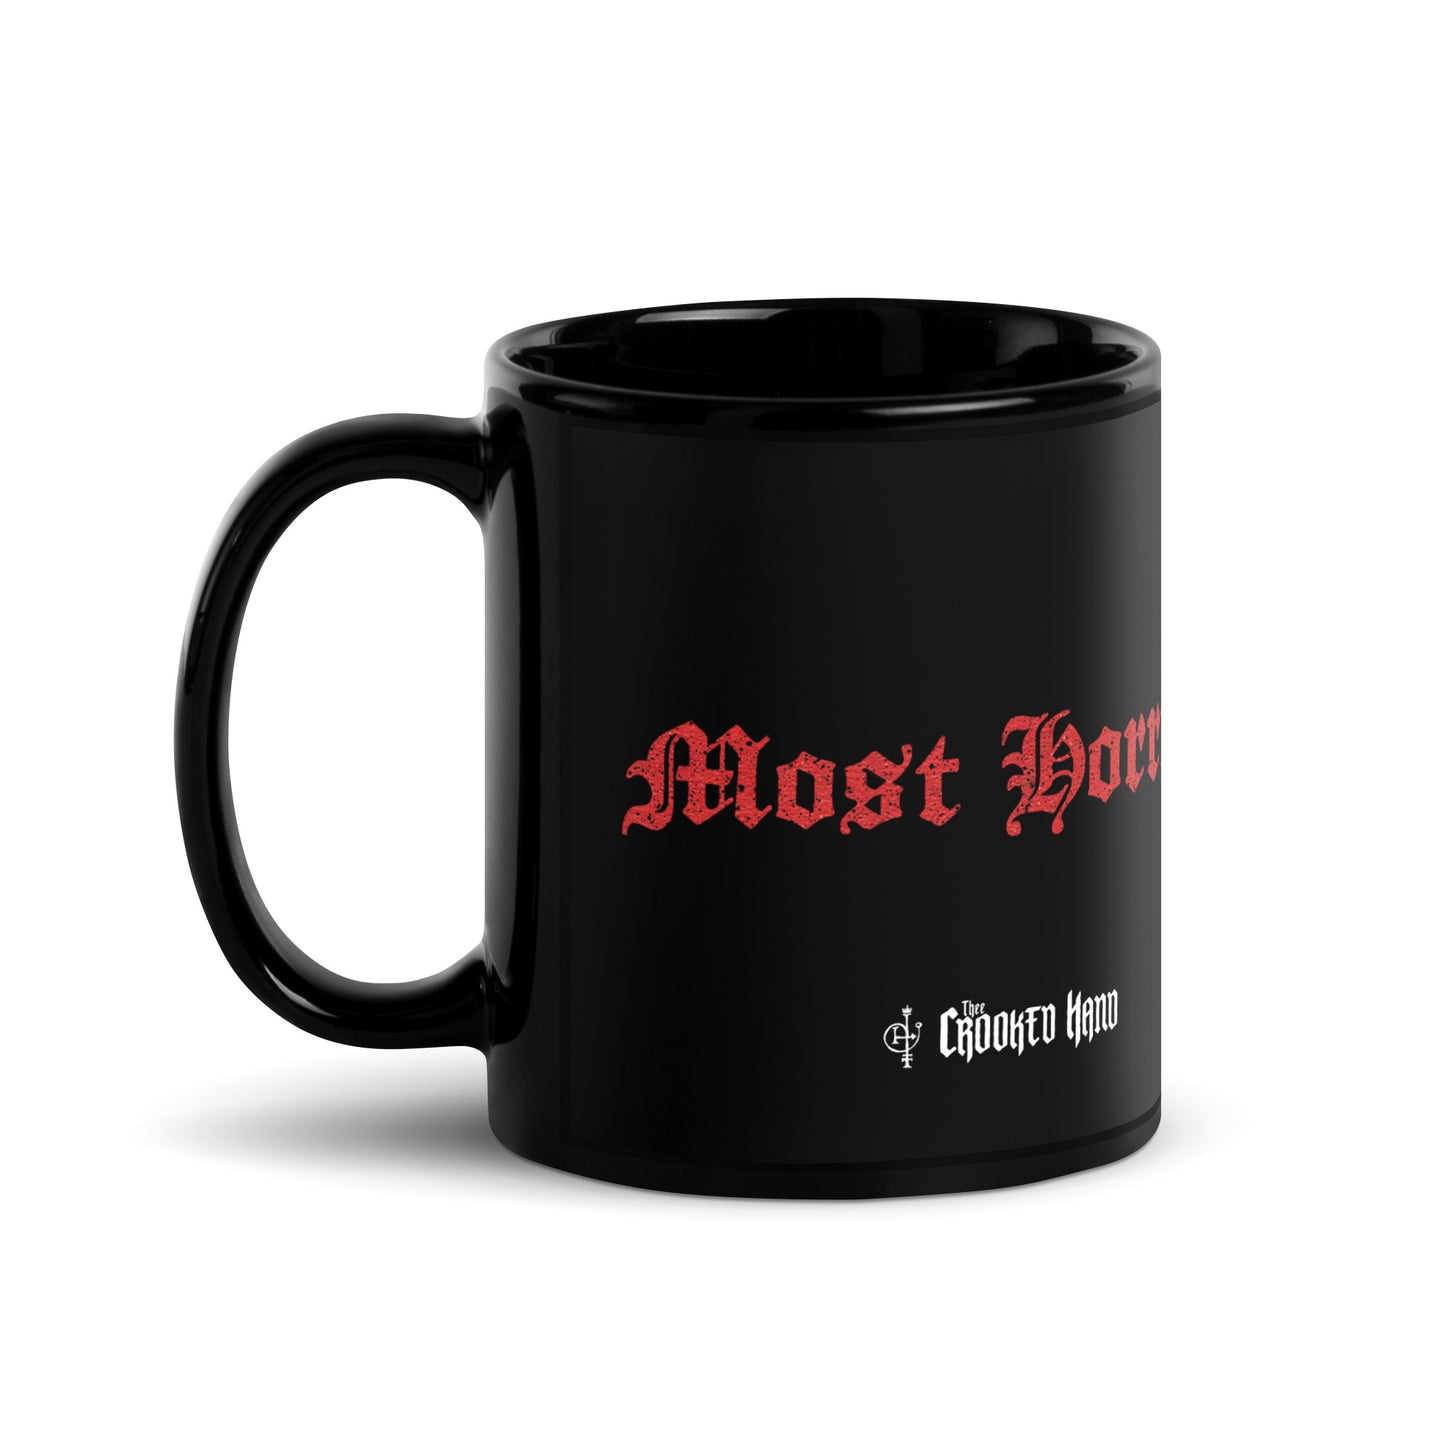 A MOST HORRIBLE Black Glossy Mug